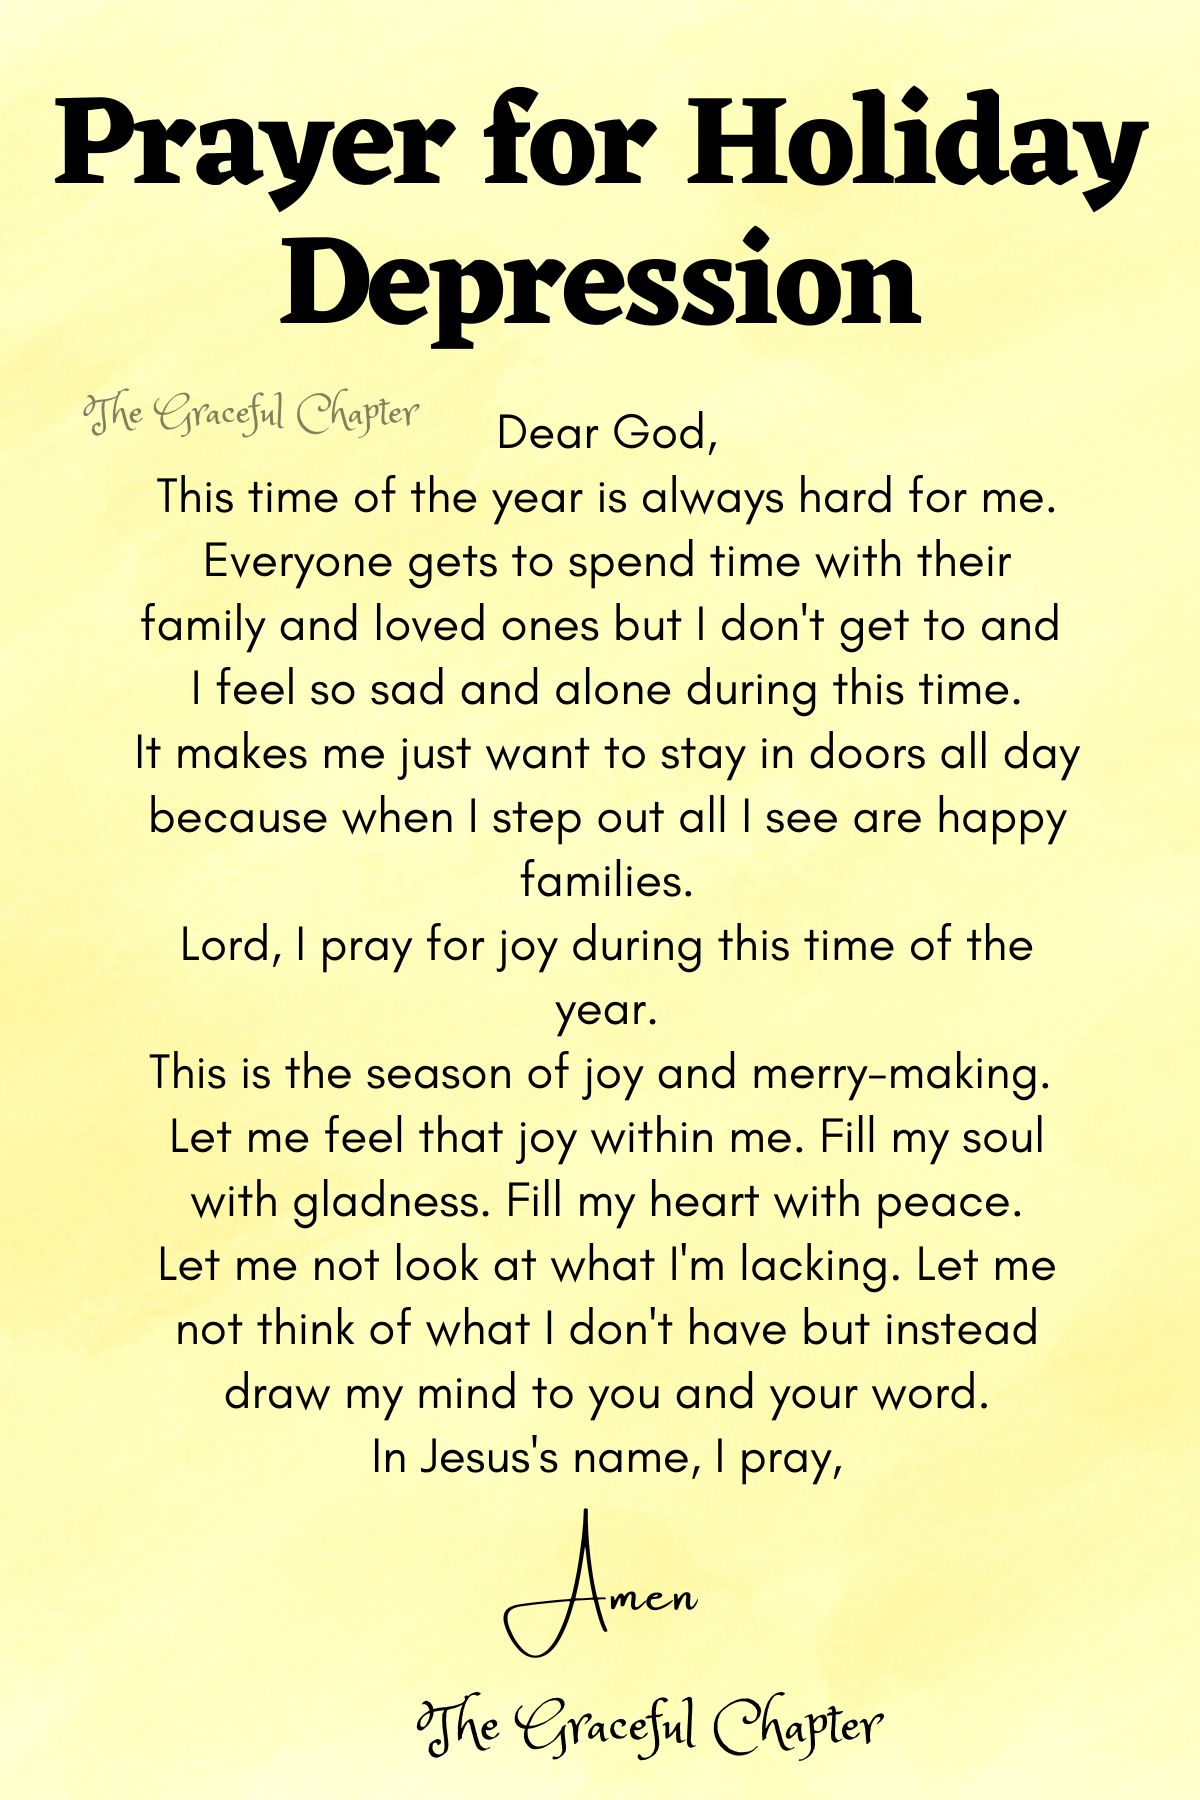 Prayer for holiday depression